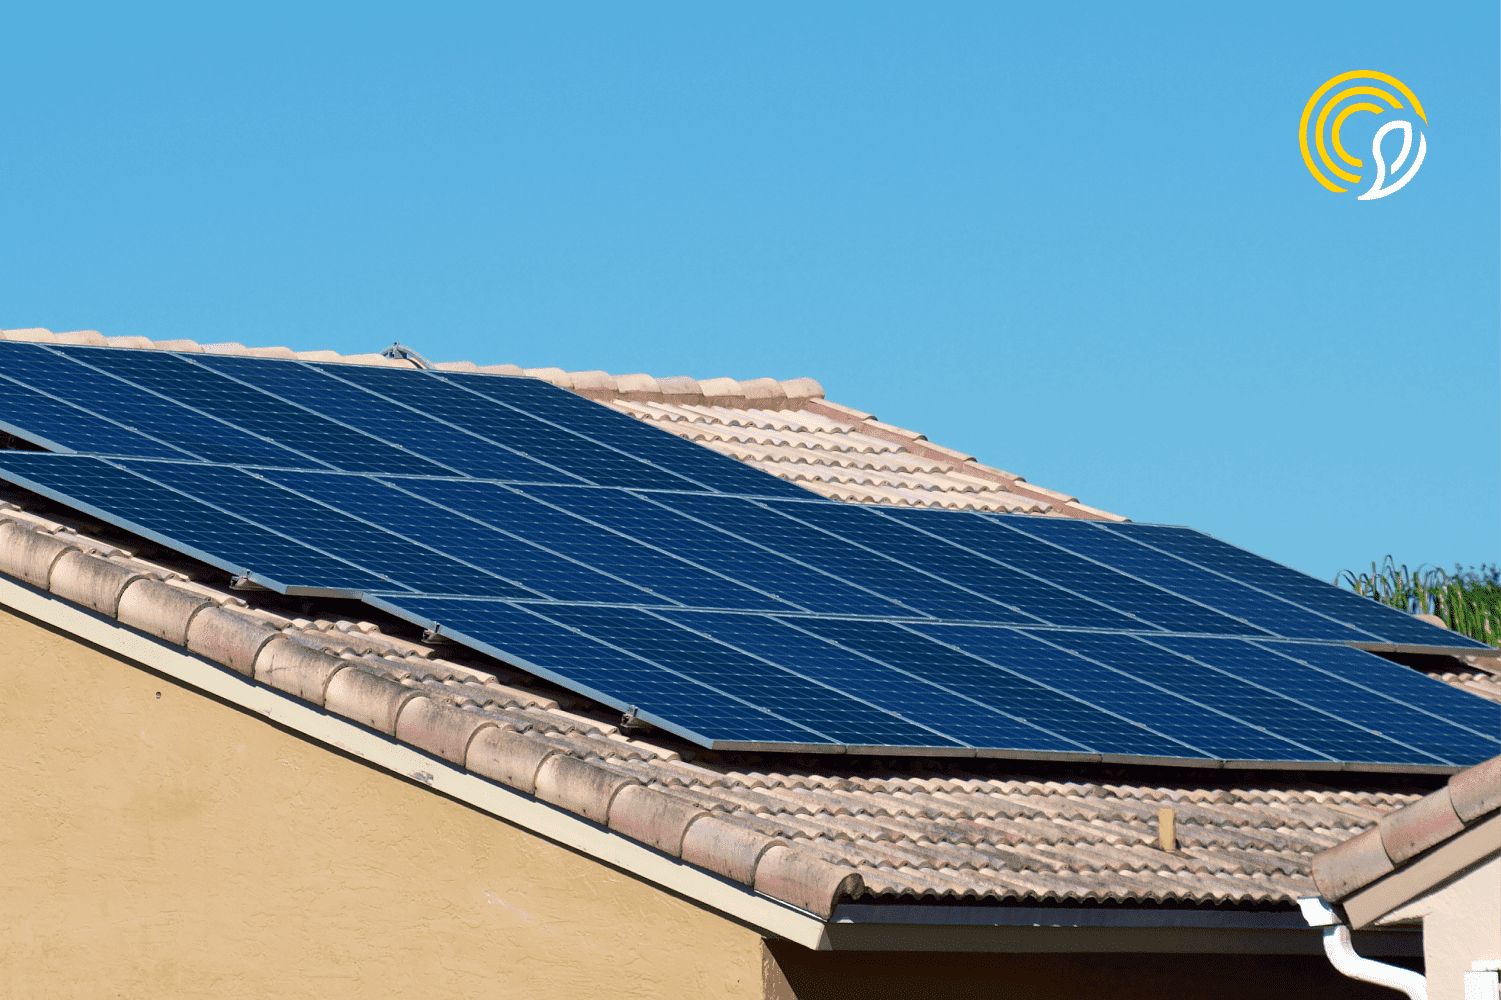 The energy efficiency of solar panels